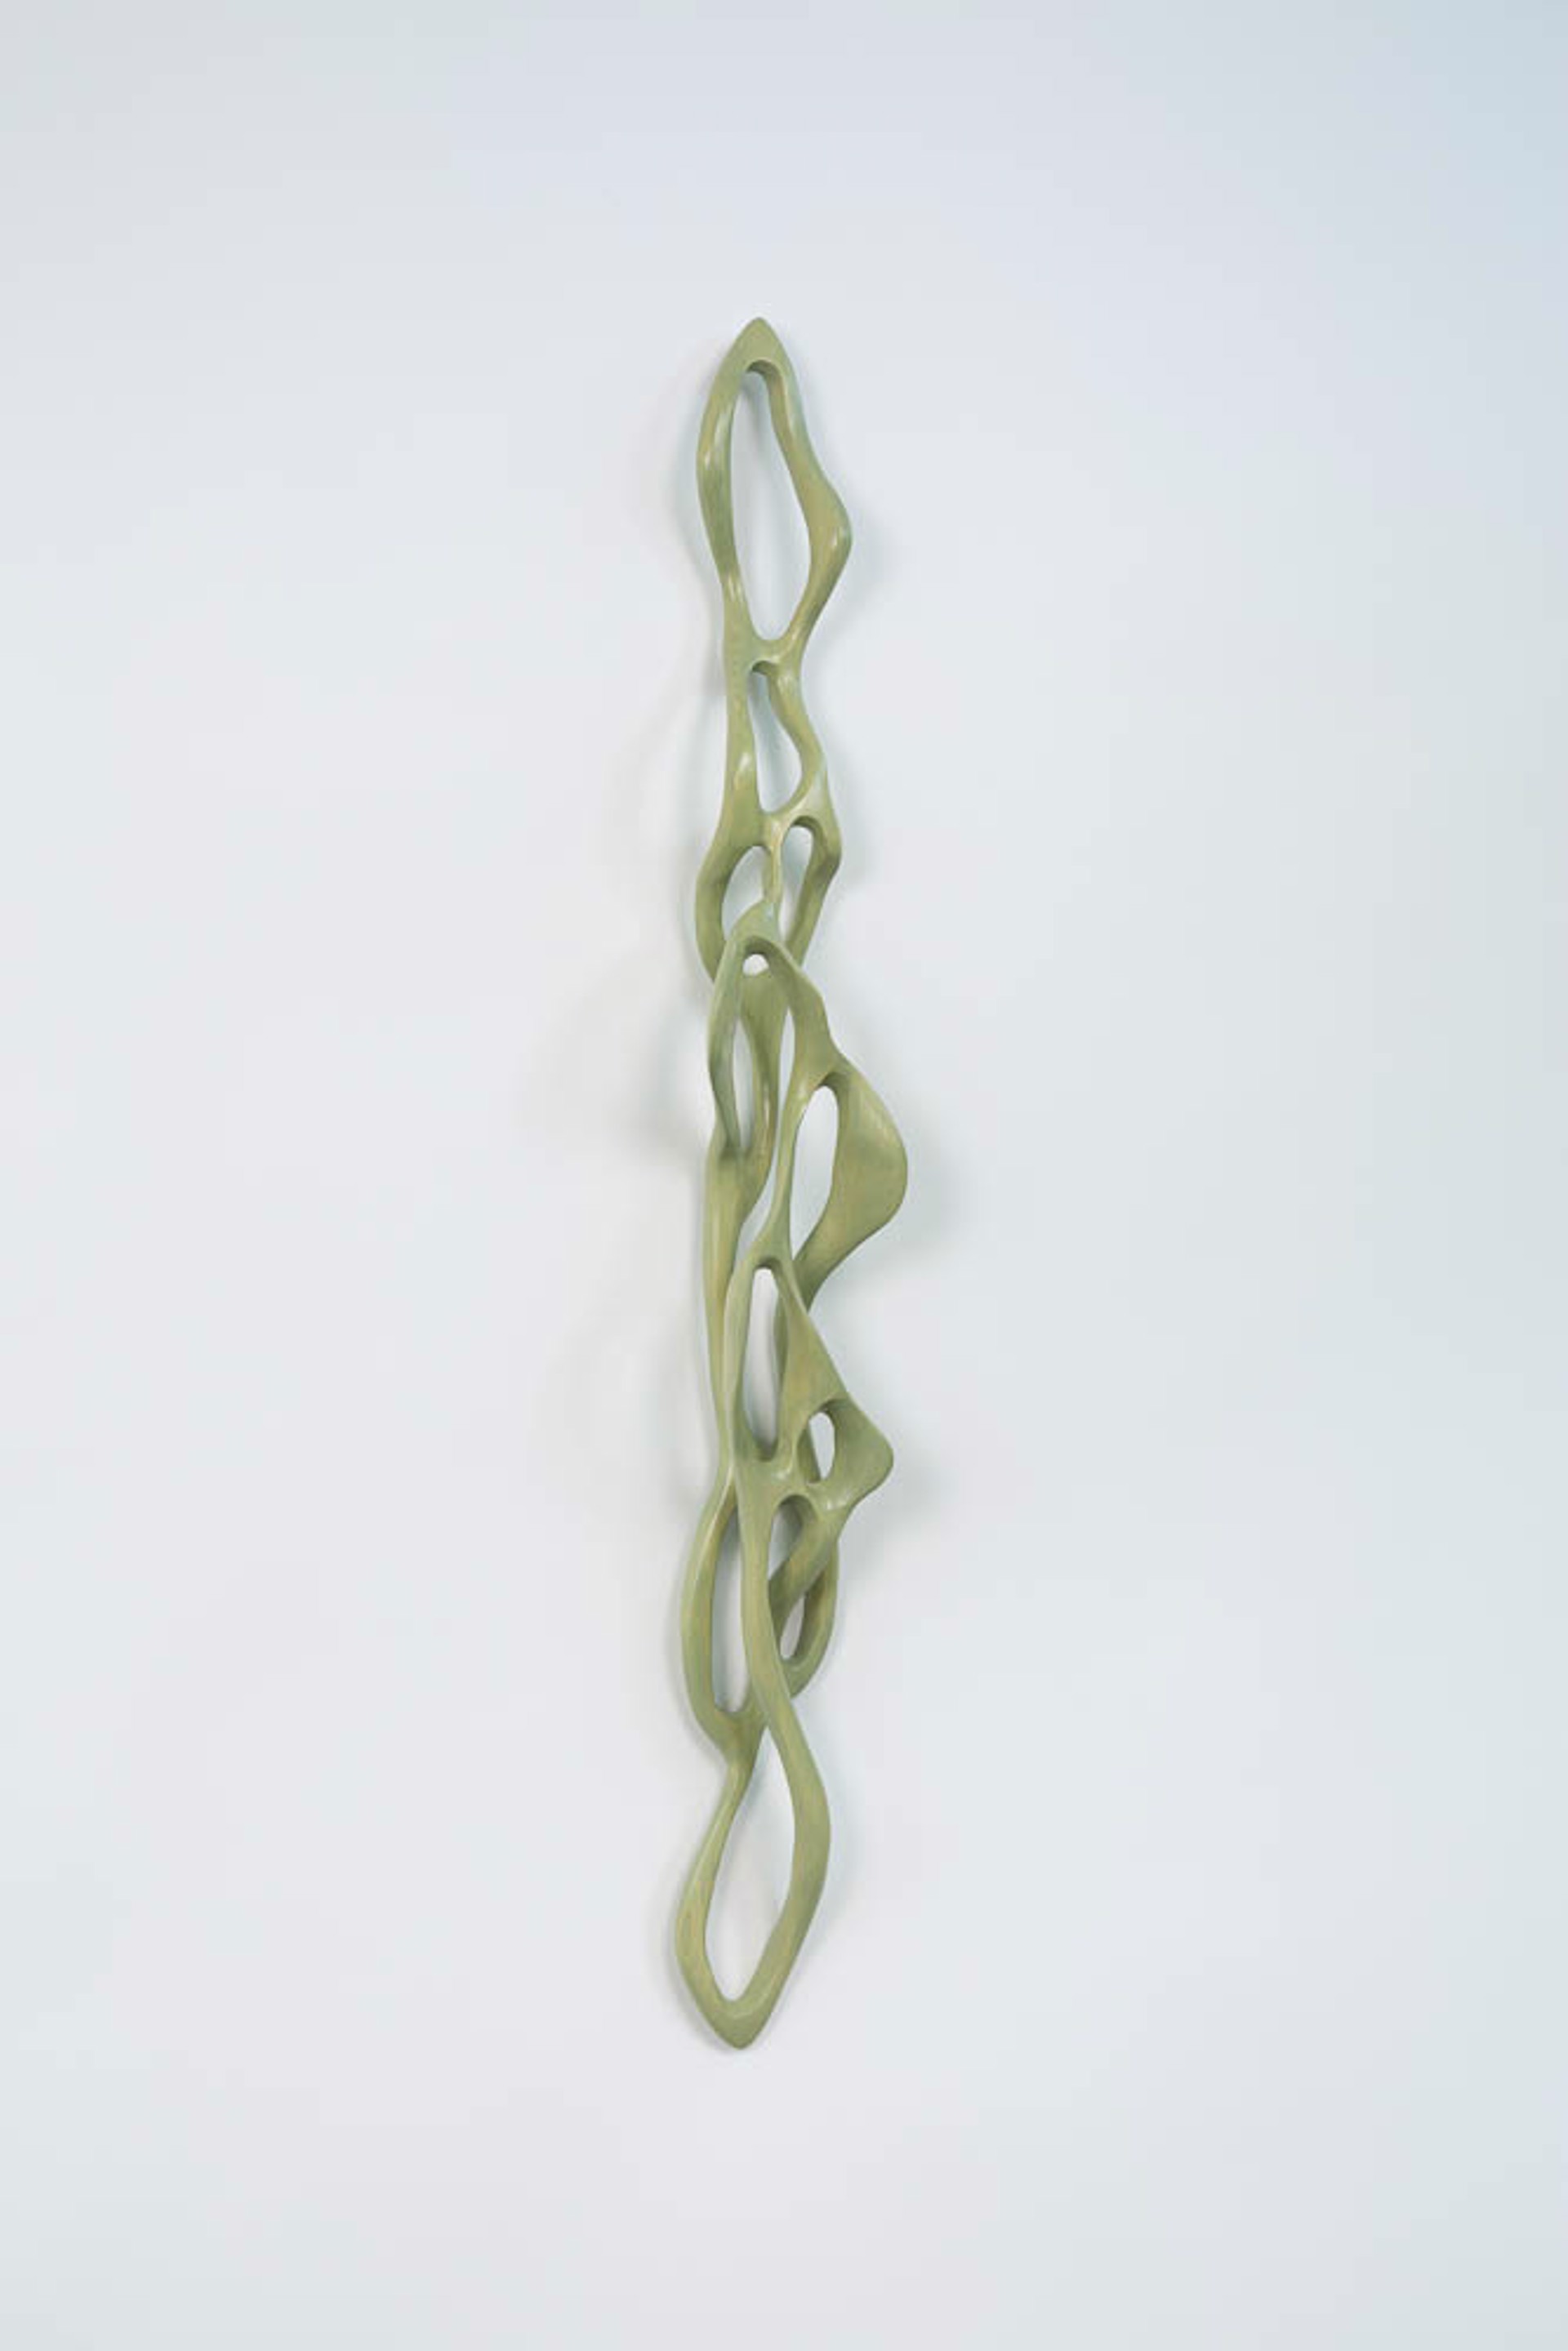 Jade Linear Loop by Caprice Pierucci